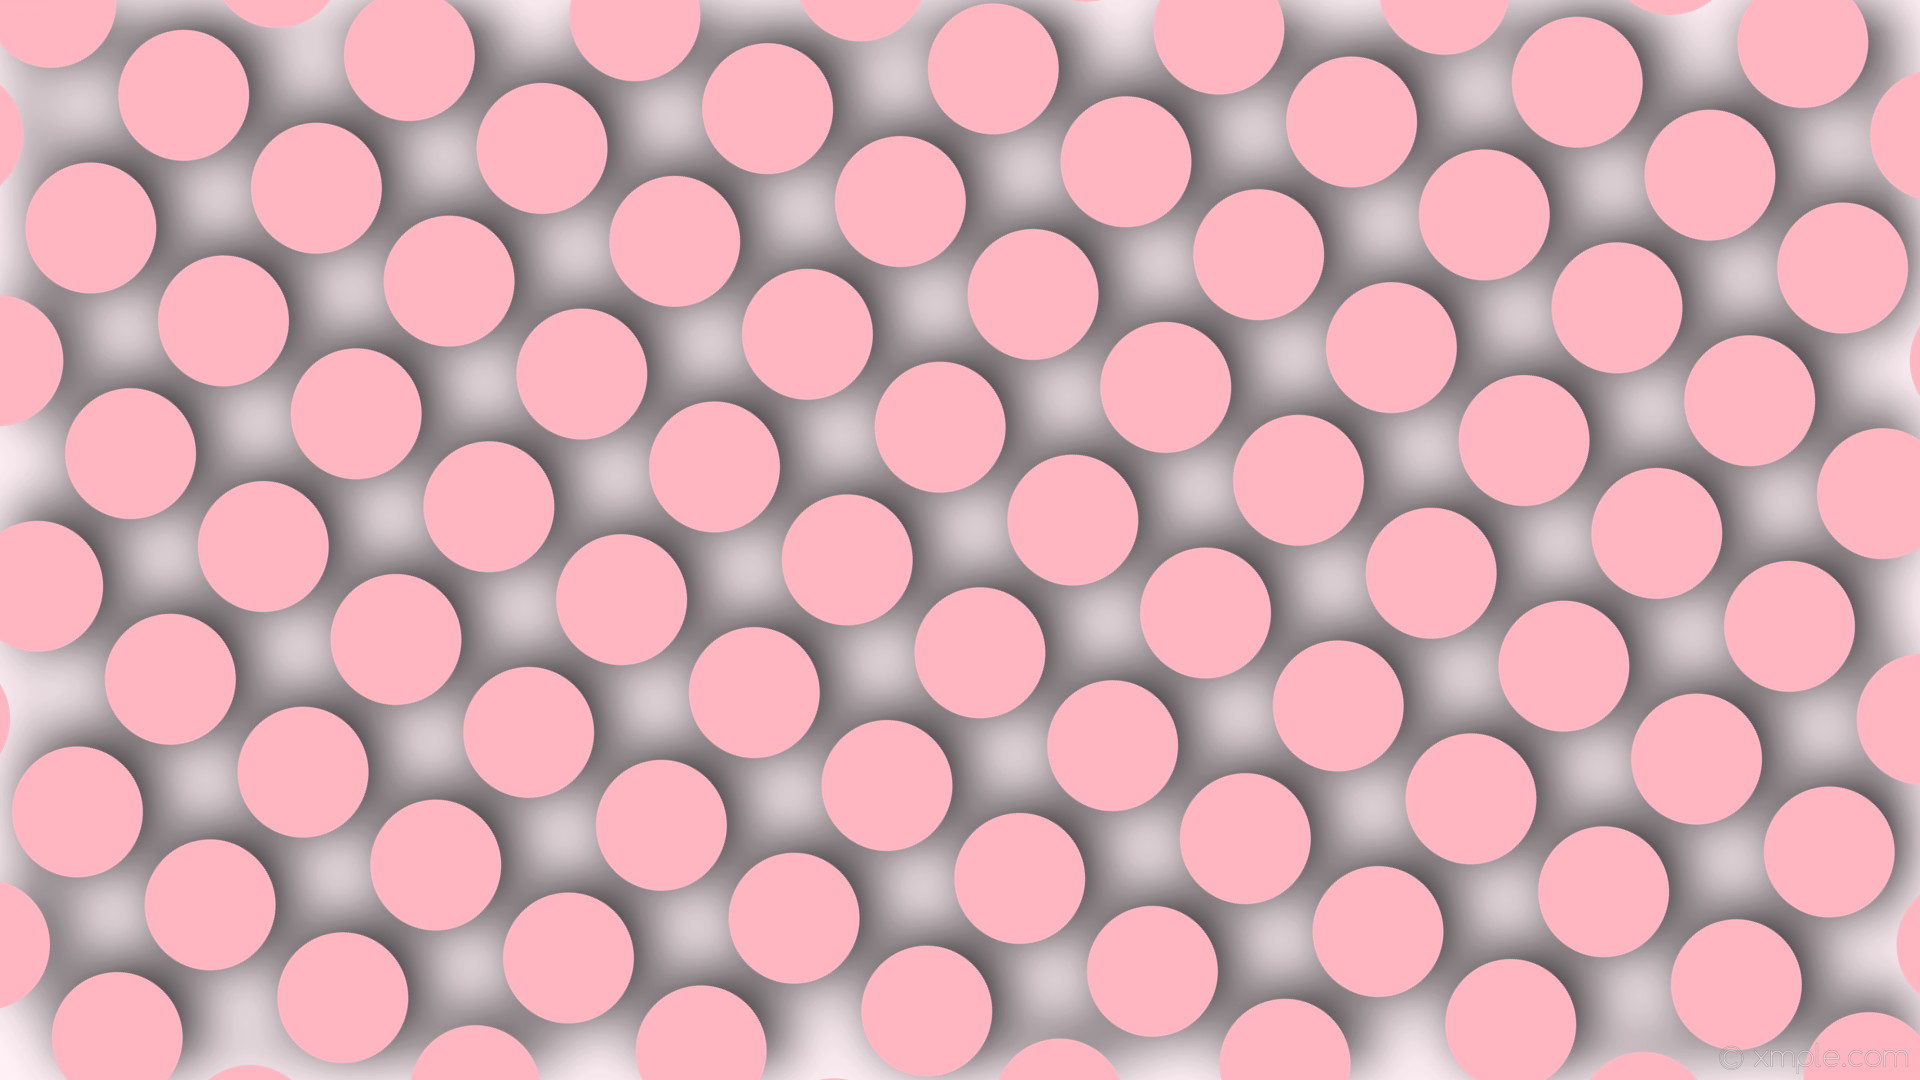 1920x1080 wallpaper pink dots drop shadow polka white lavender blush light pink  #fff0f5 #ffb6c1 55